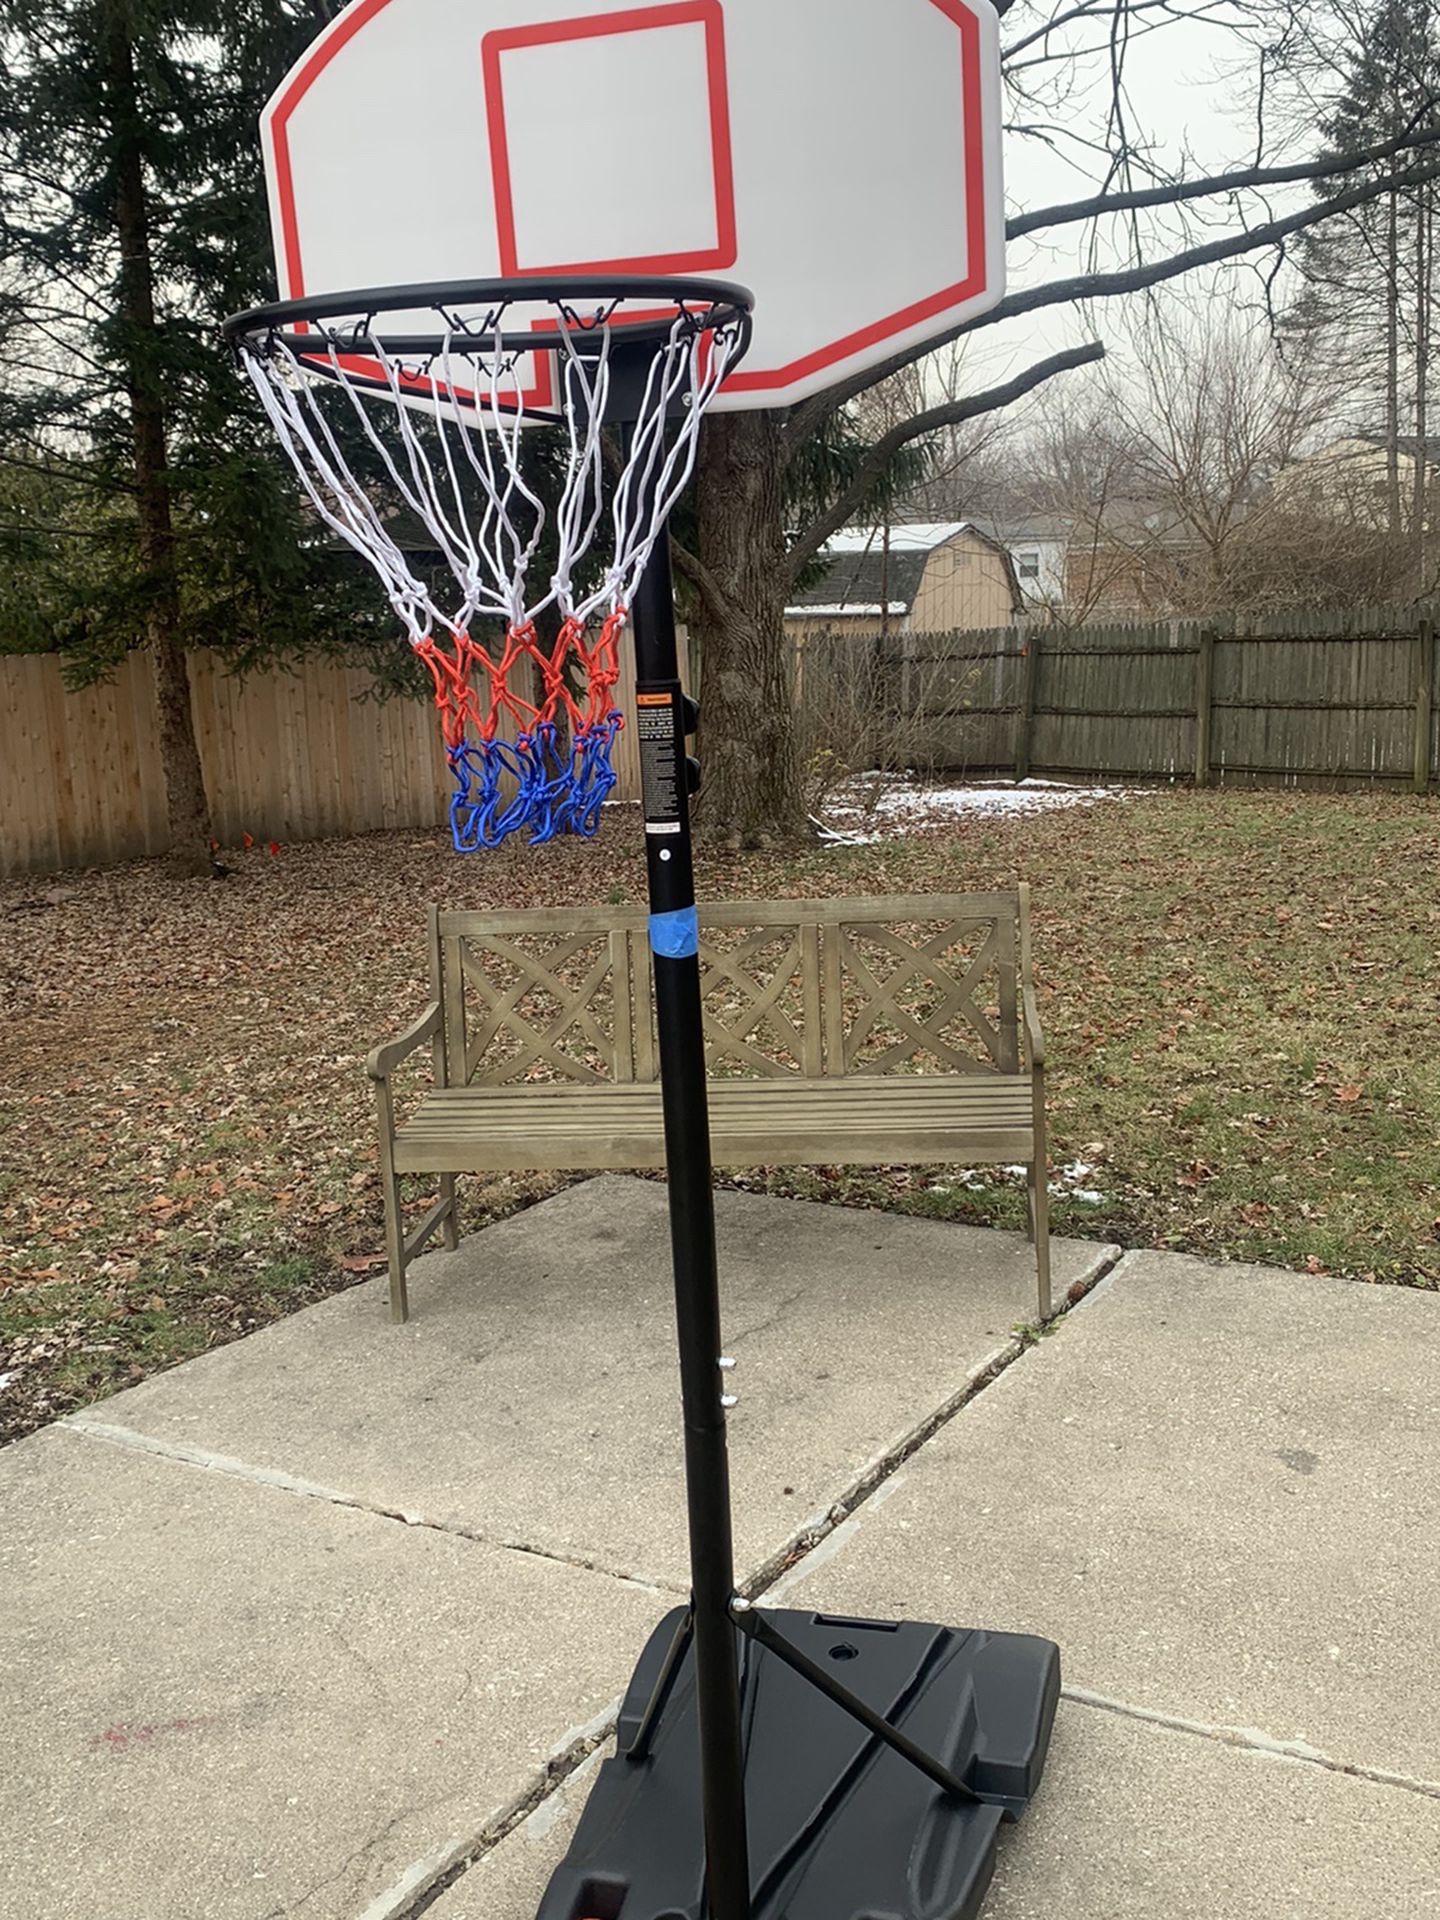 Kids Portable Height-Adjustable Sports Basketball Hoop Backboard System Stand w/ Wheels - Black